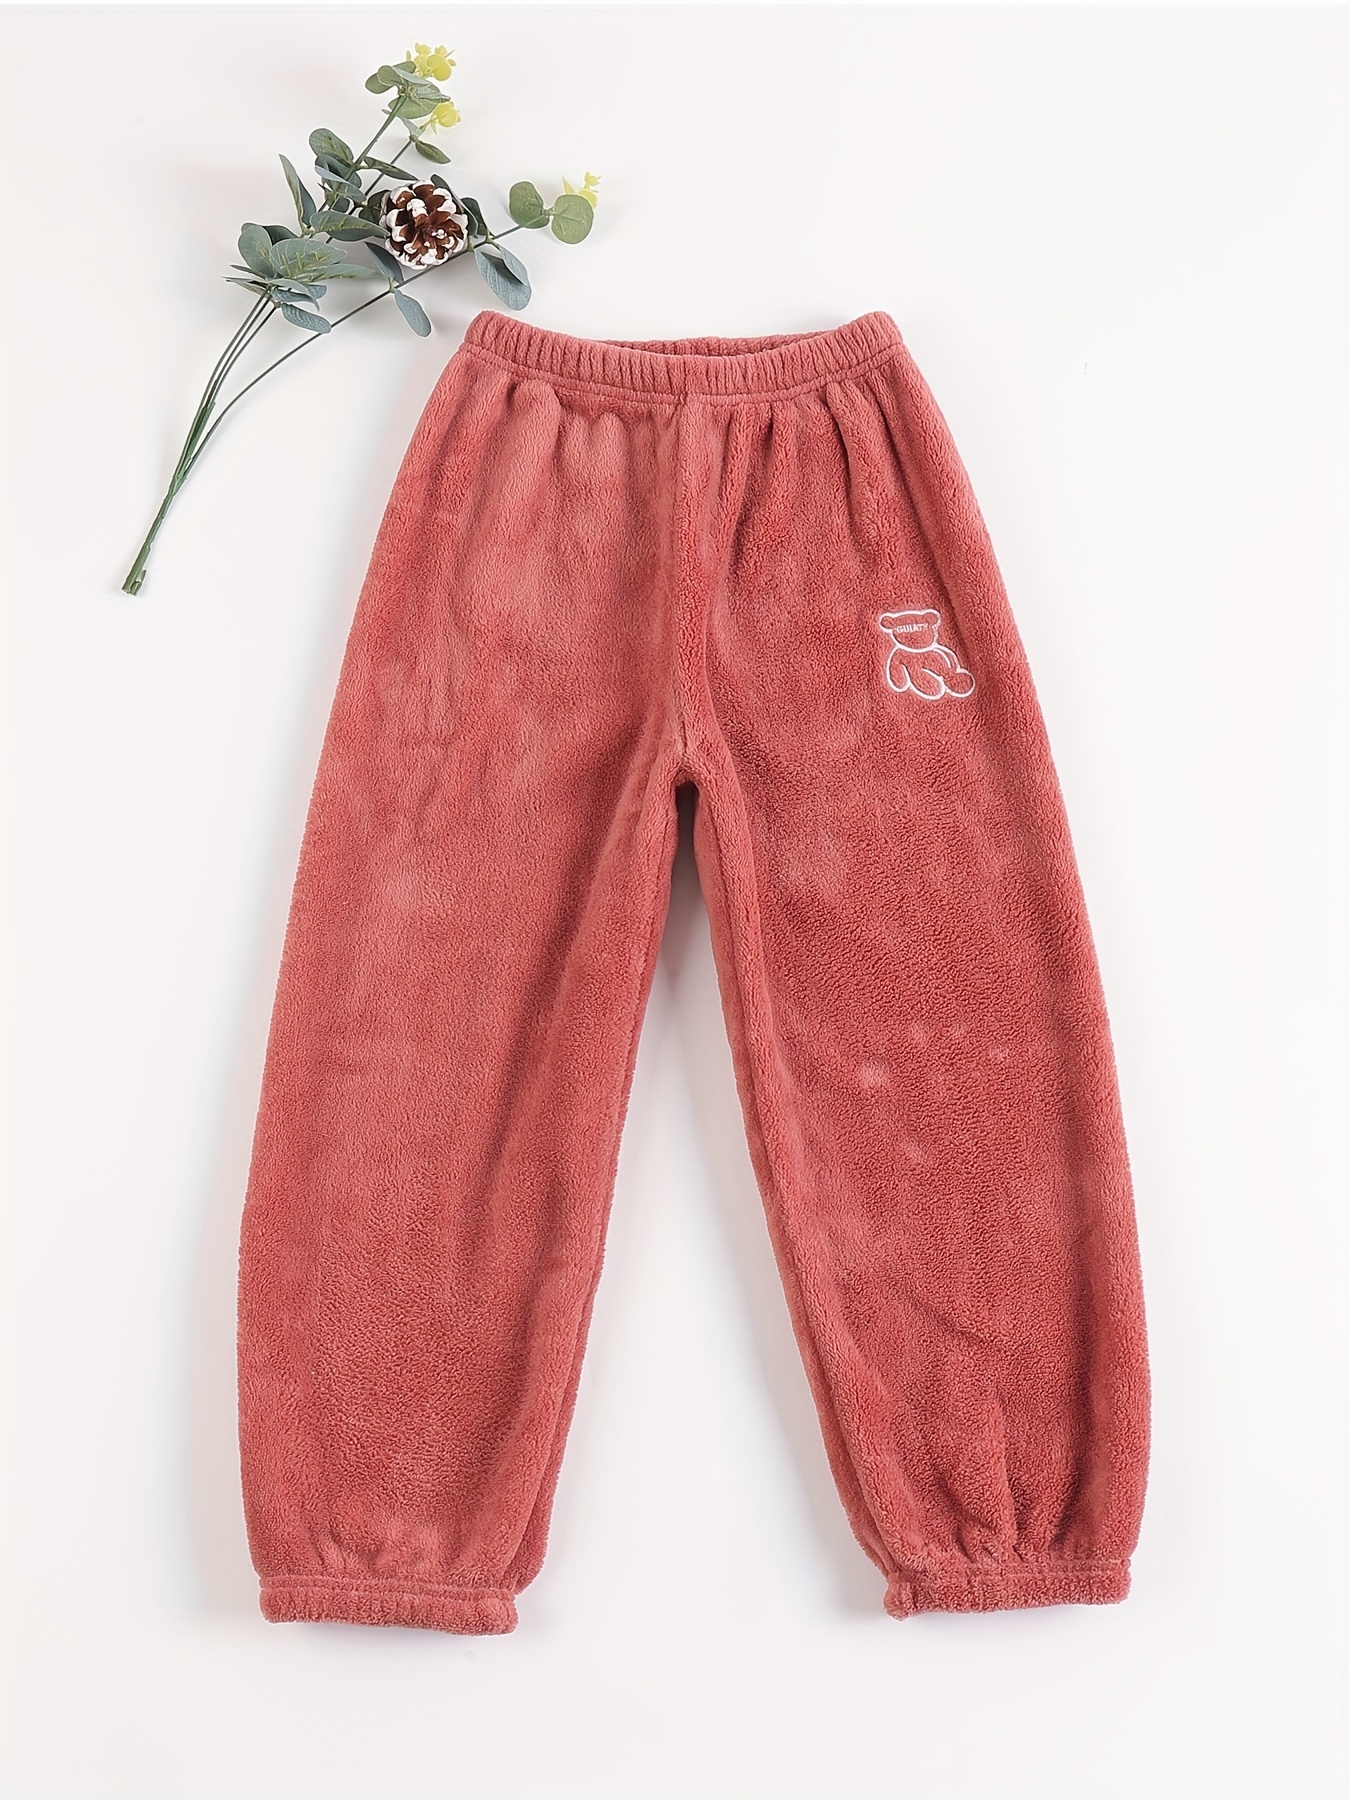 Winter Pants Bottoms For Women Warm Thick Coral Fleece Sleep Pants